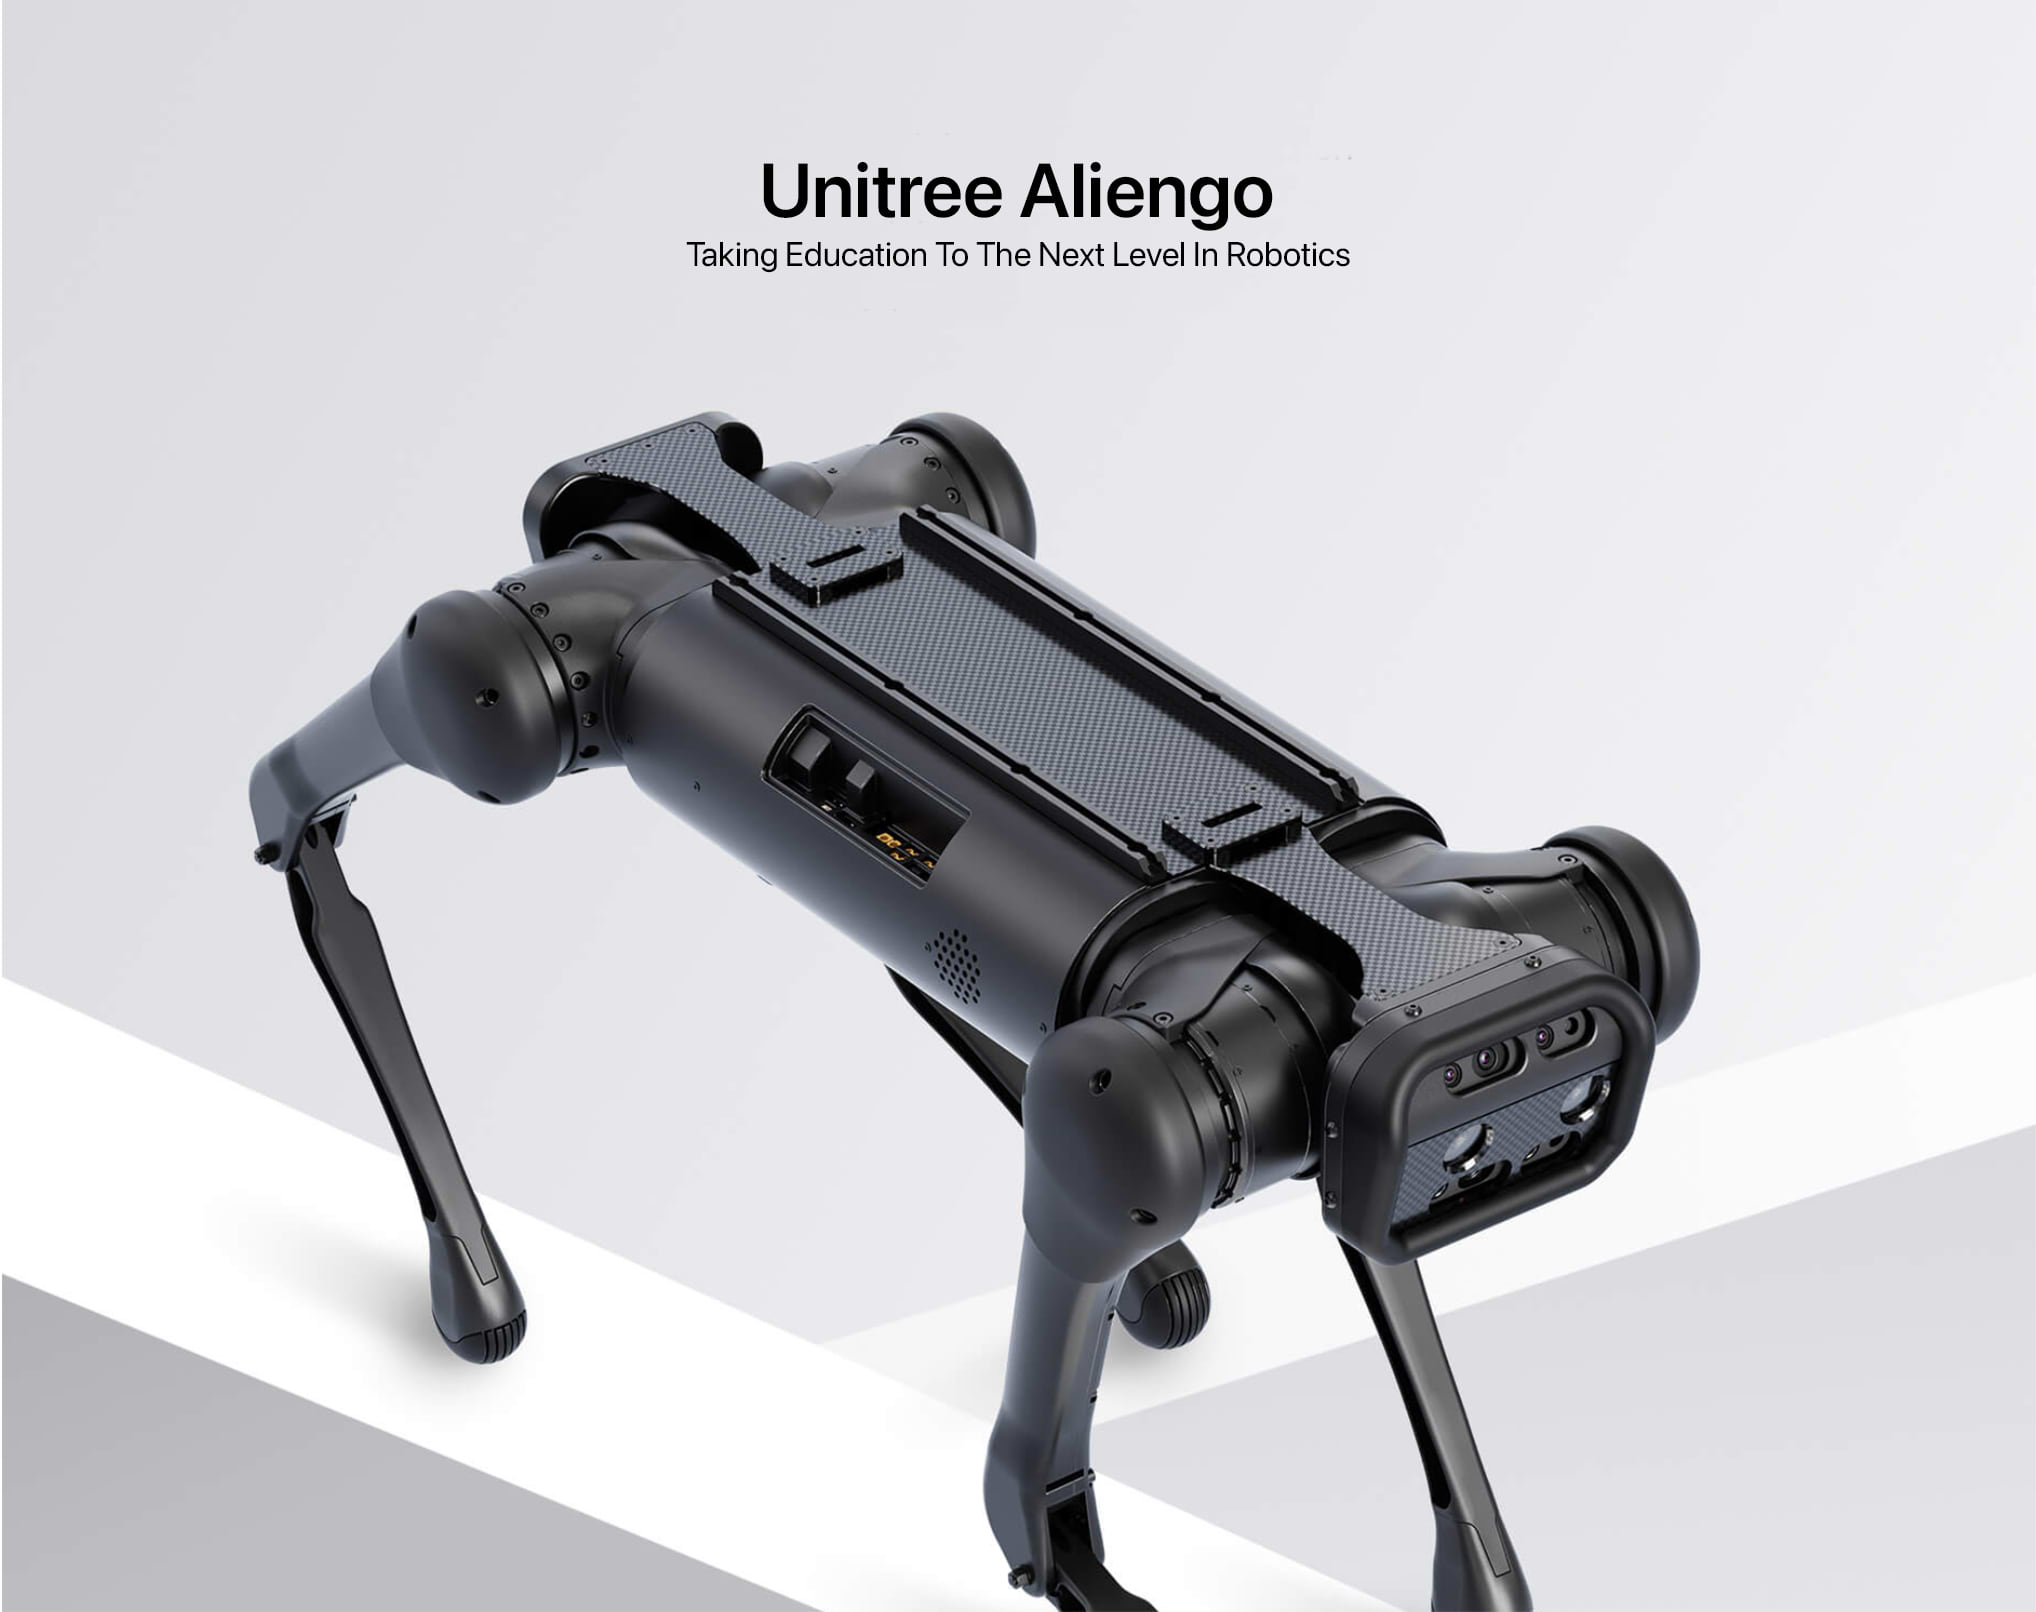 Unitree AlienGp Product page